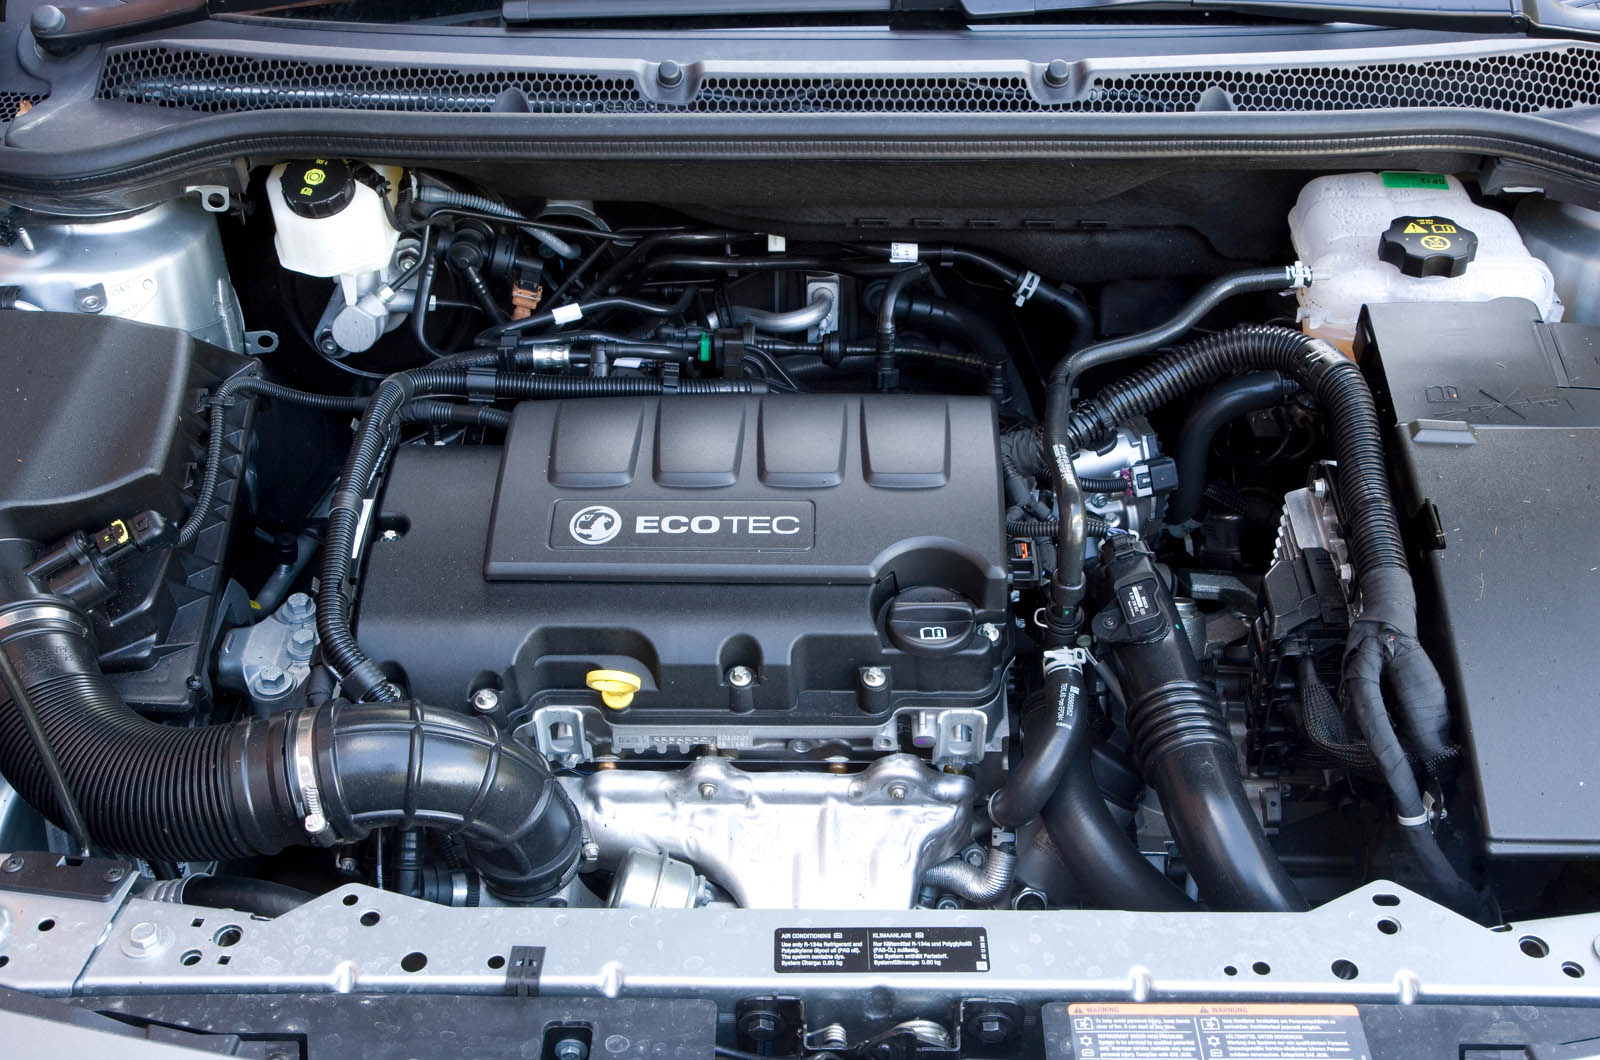 1.4-litre Vauxhall Astra petrol engine